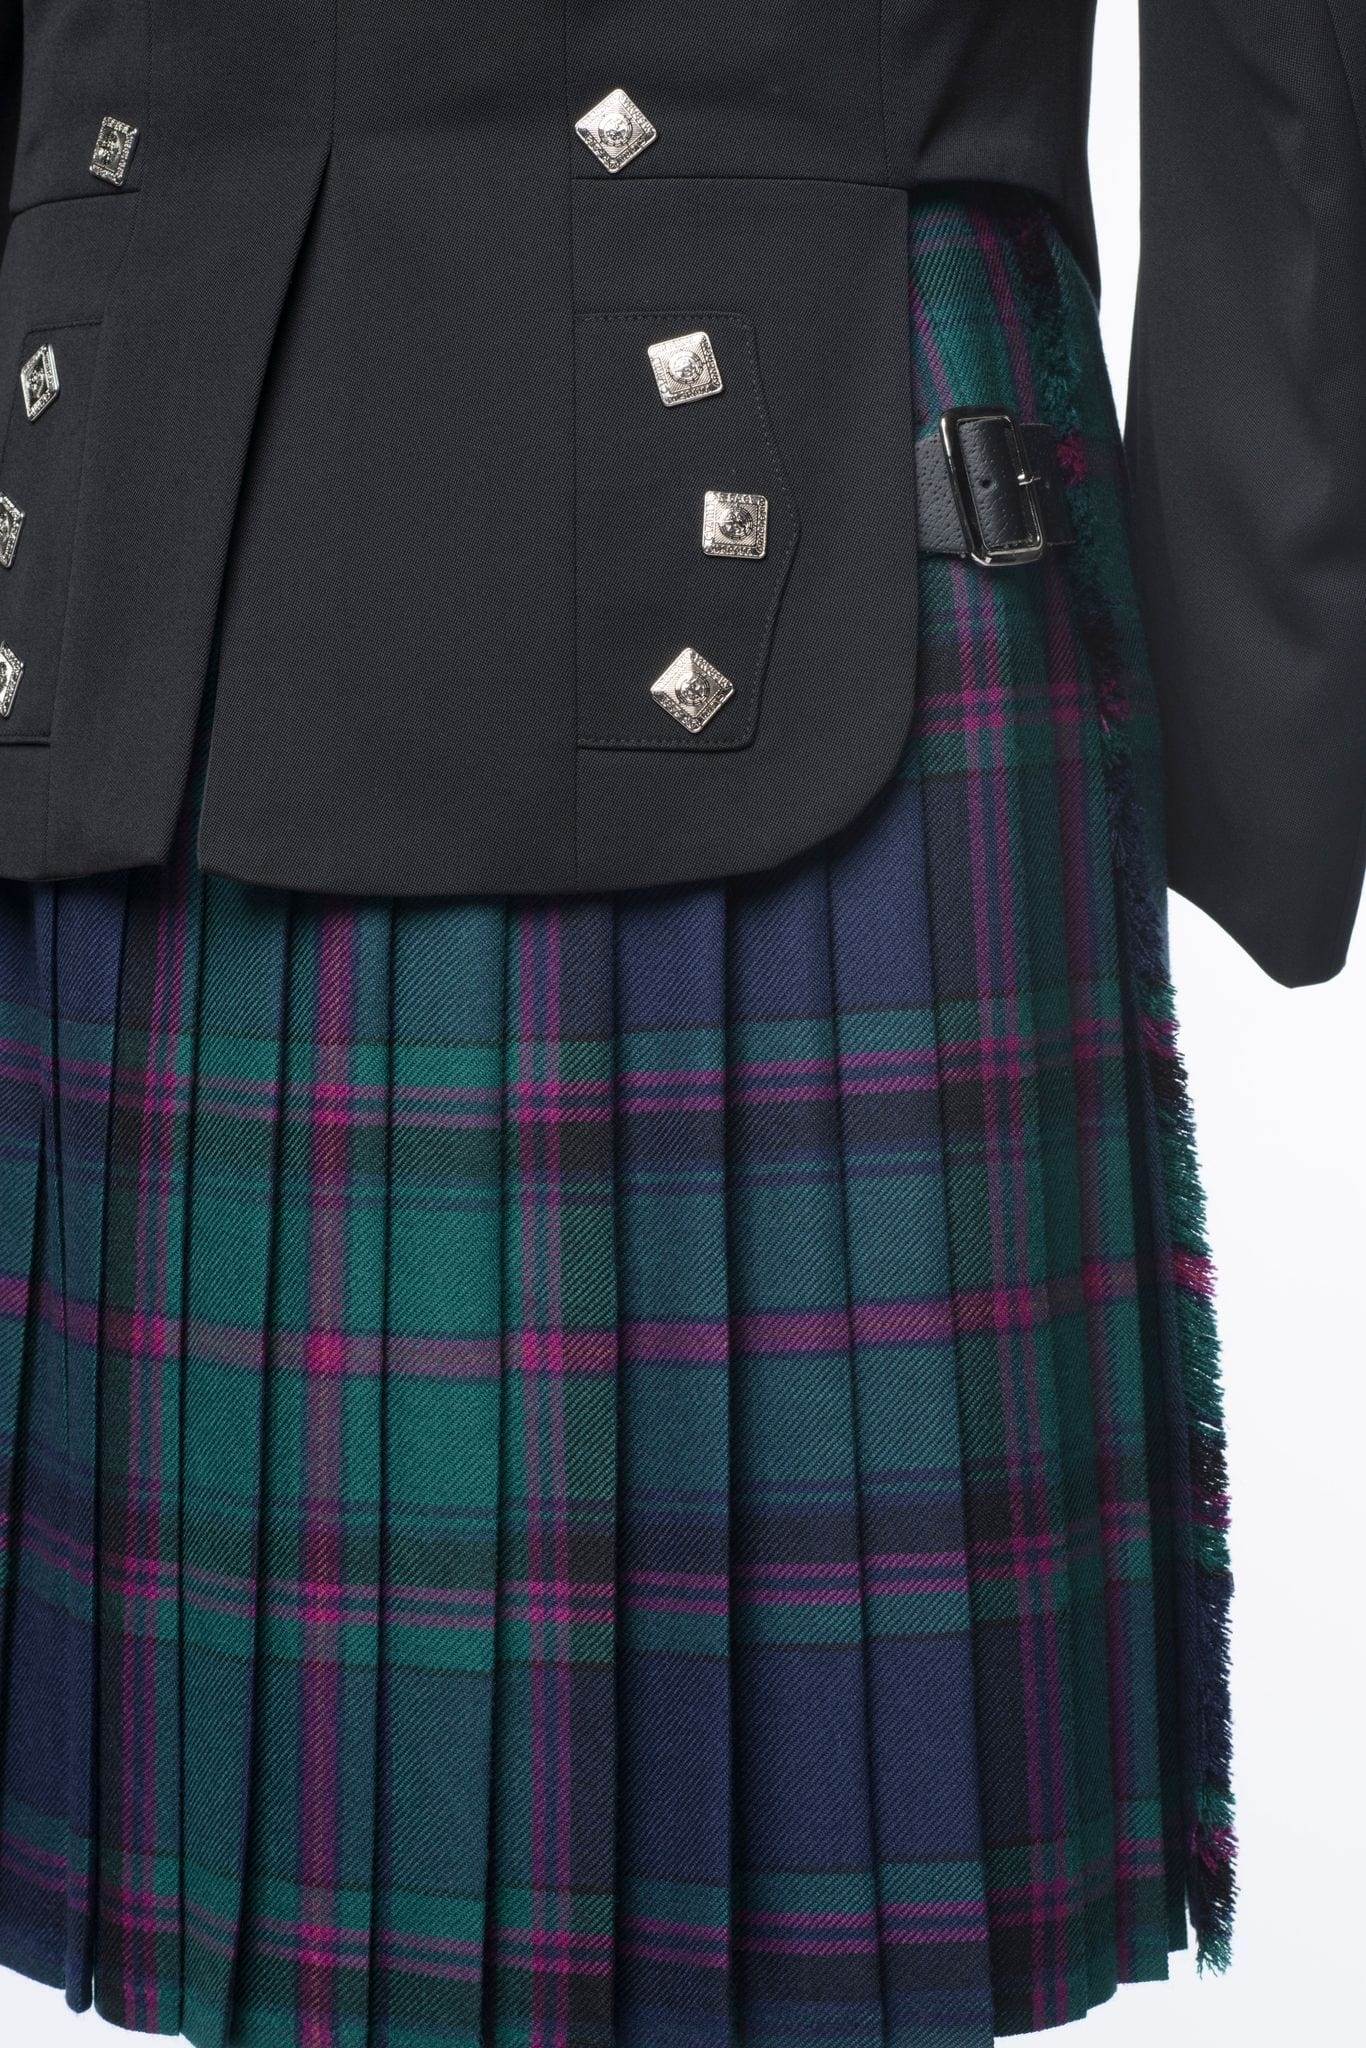 Prince Charlie Kilt Jacket and 5 Button Waistcoat - MacGregor and MacDuff